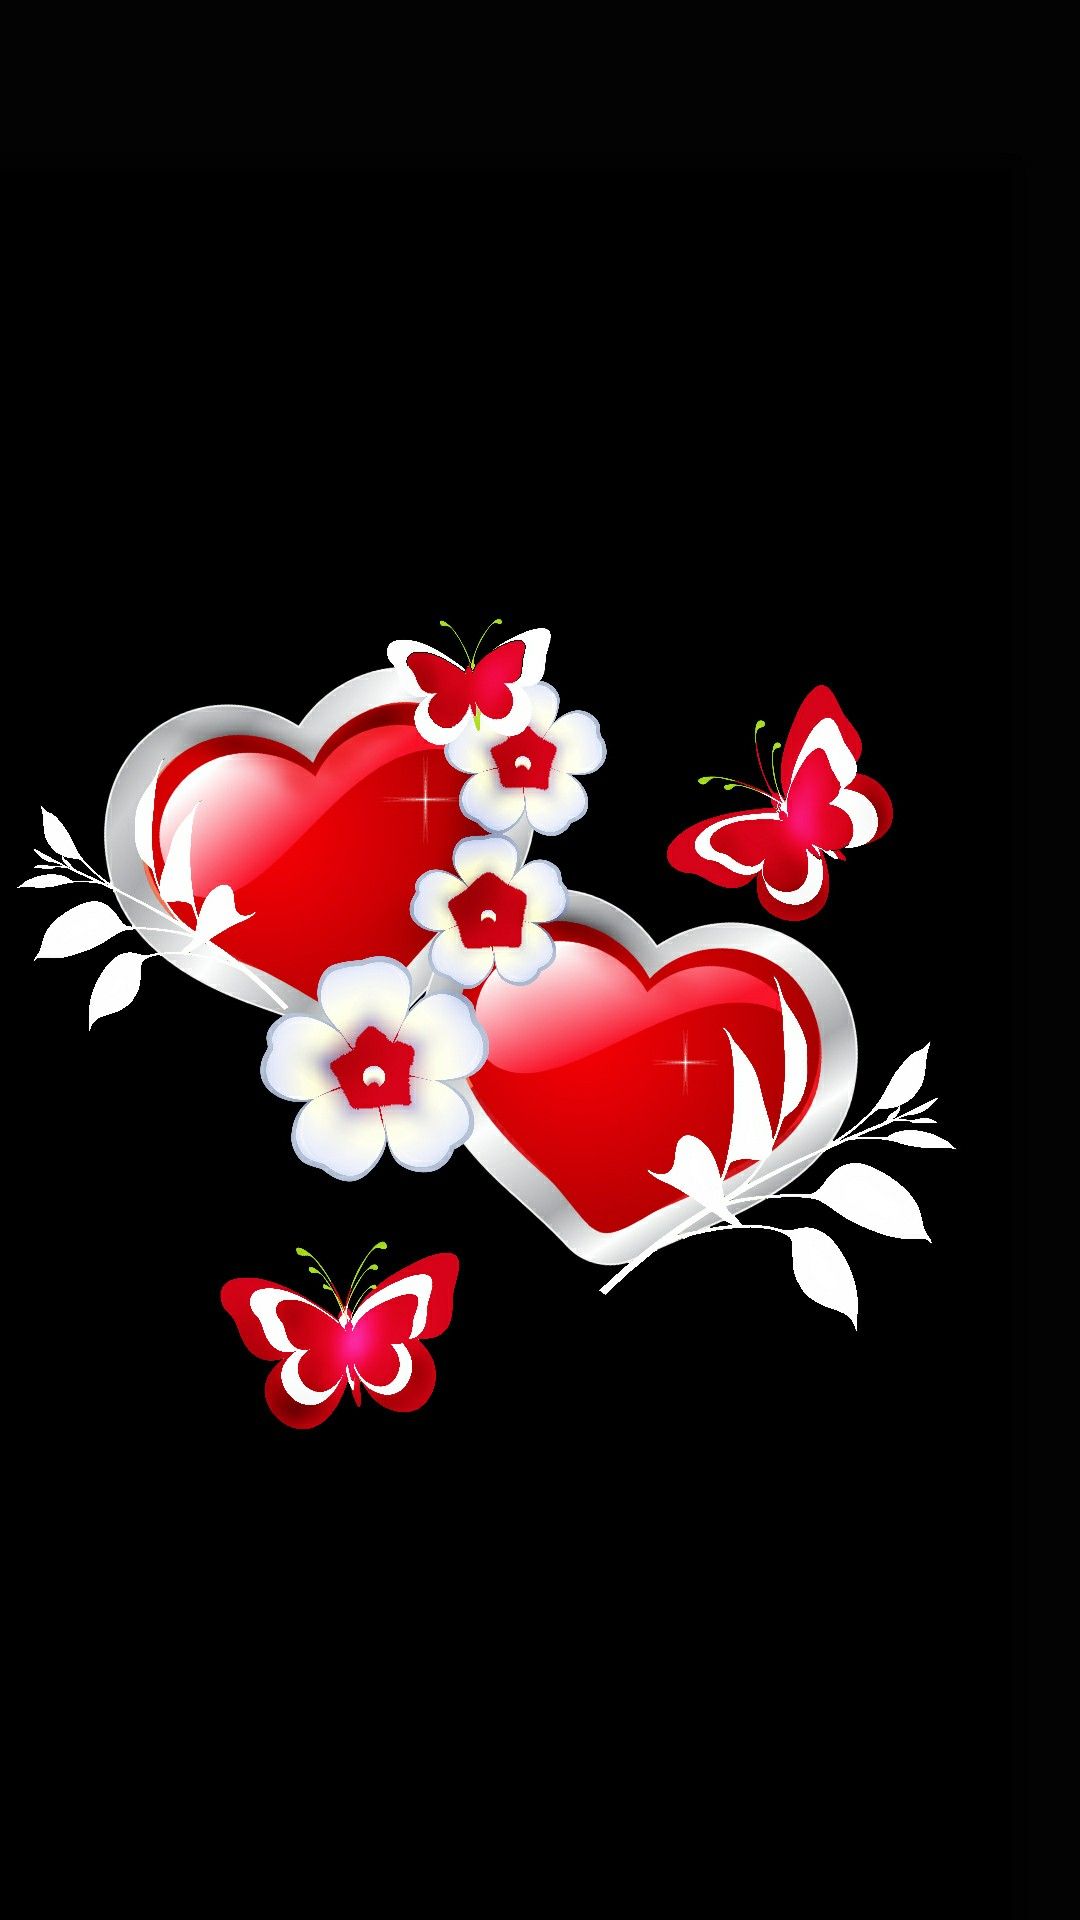 Red & white hearts & butterflies. Heart wallpaper, Valentines wallpaper, Flower wallpaper